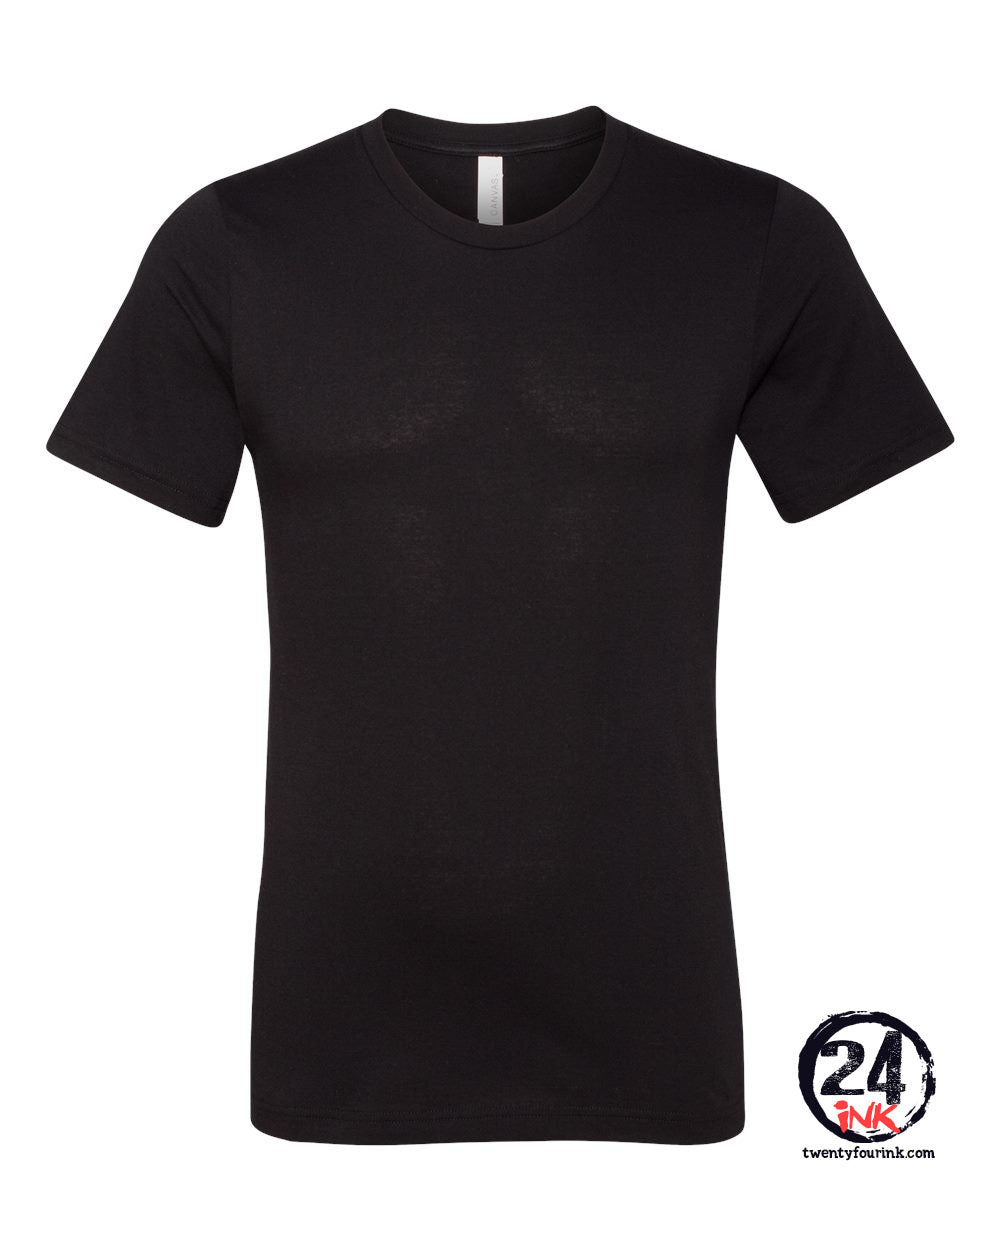 Goshen Football Design 8 t-Shirt